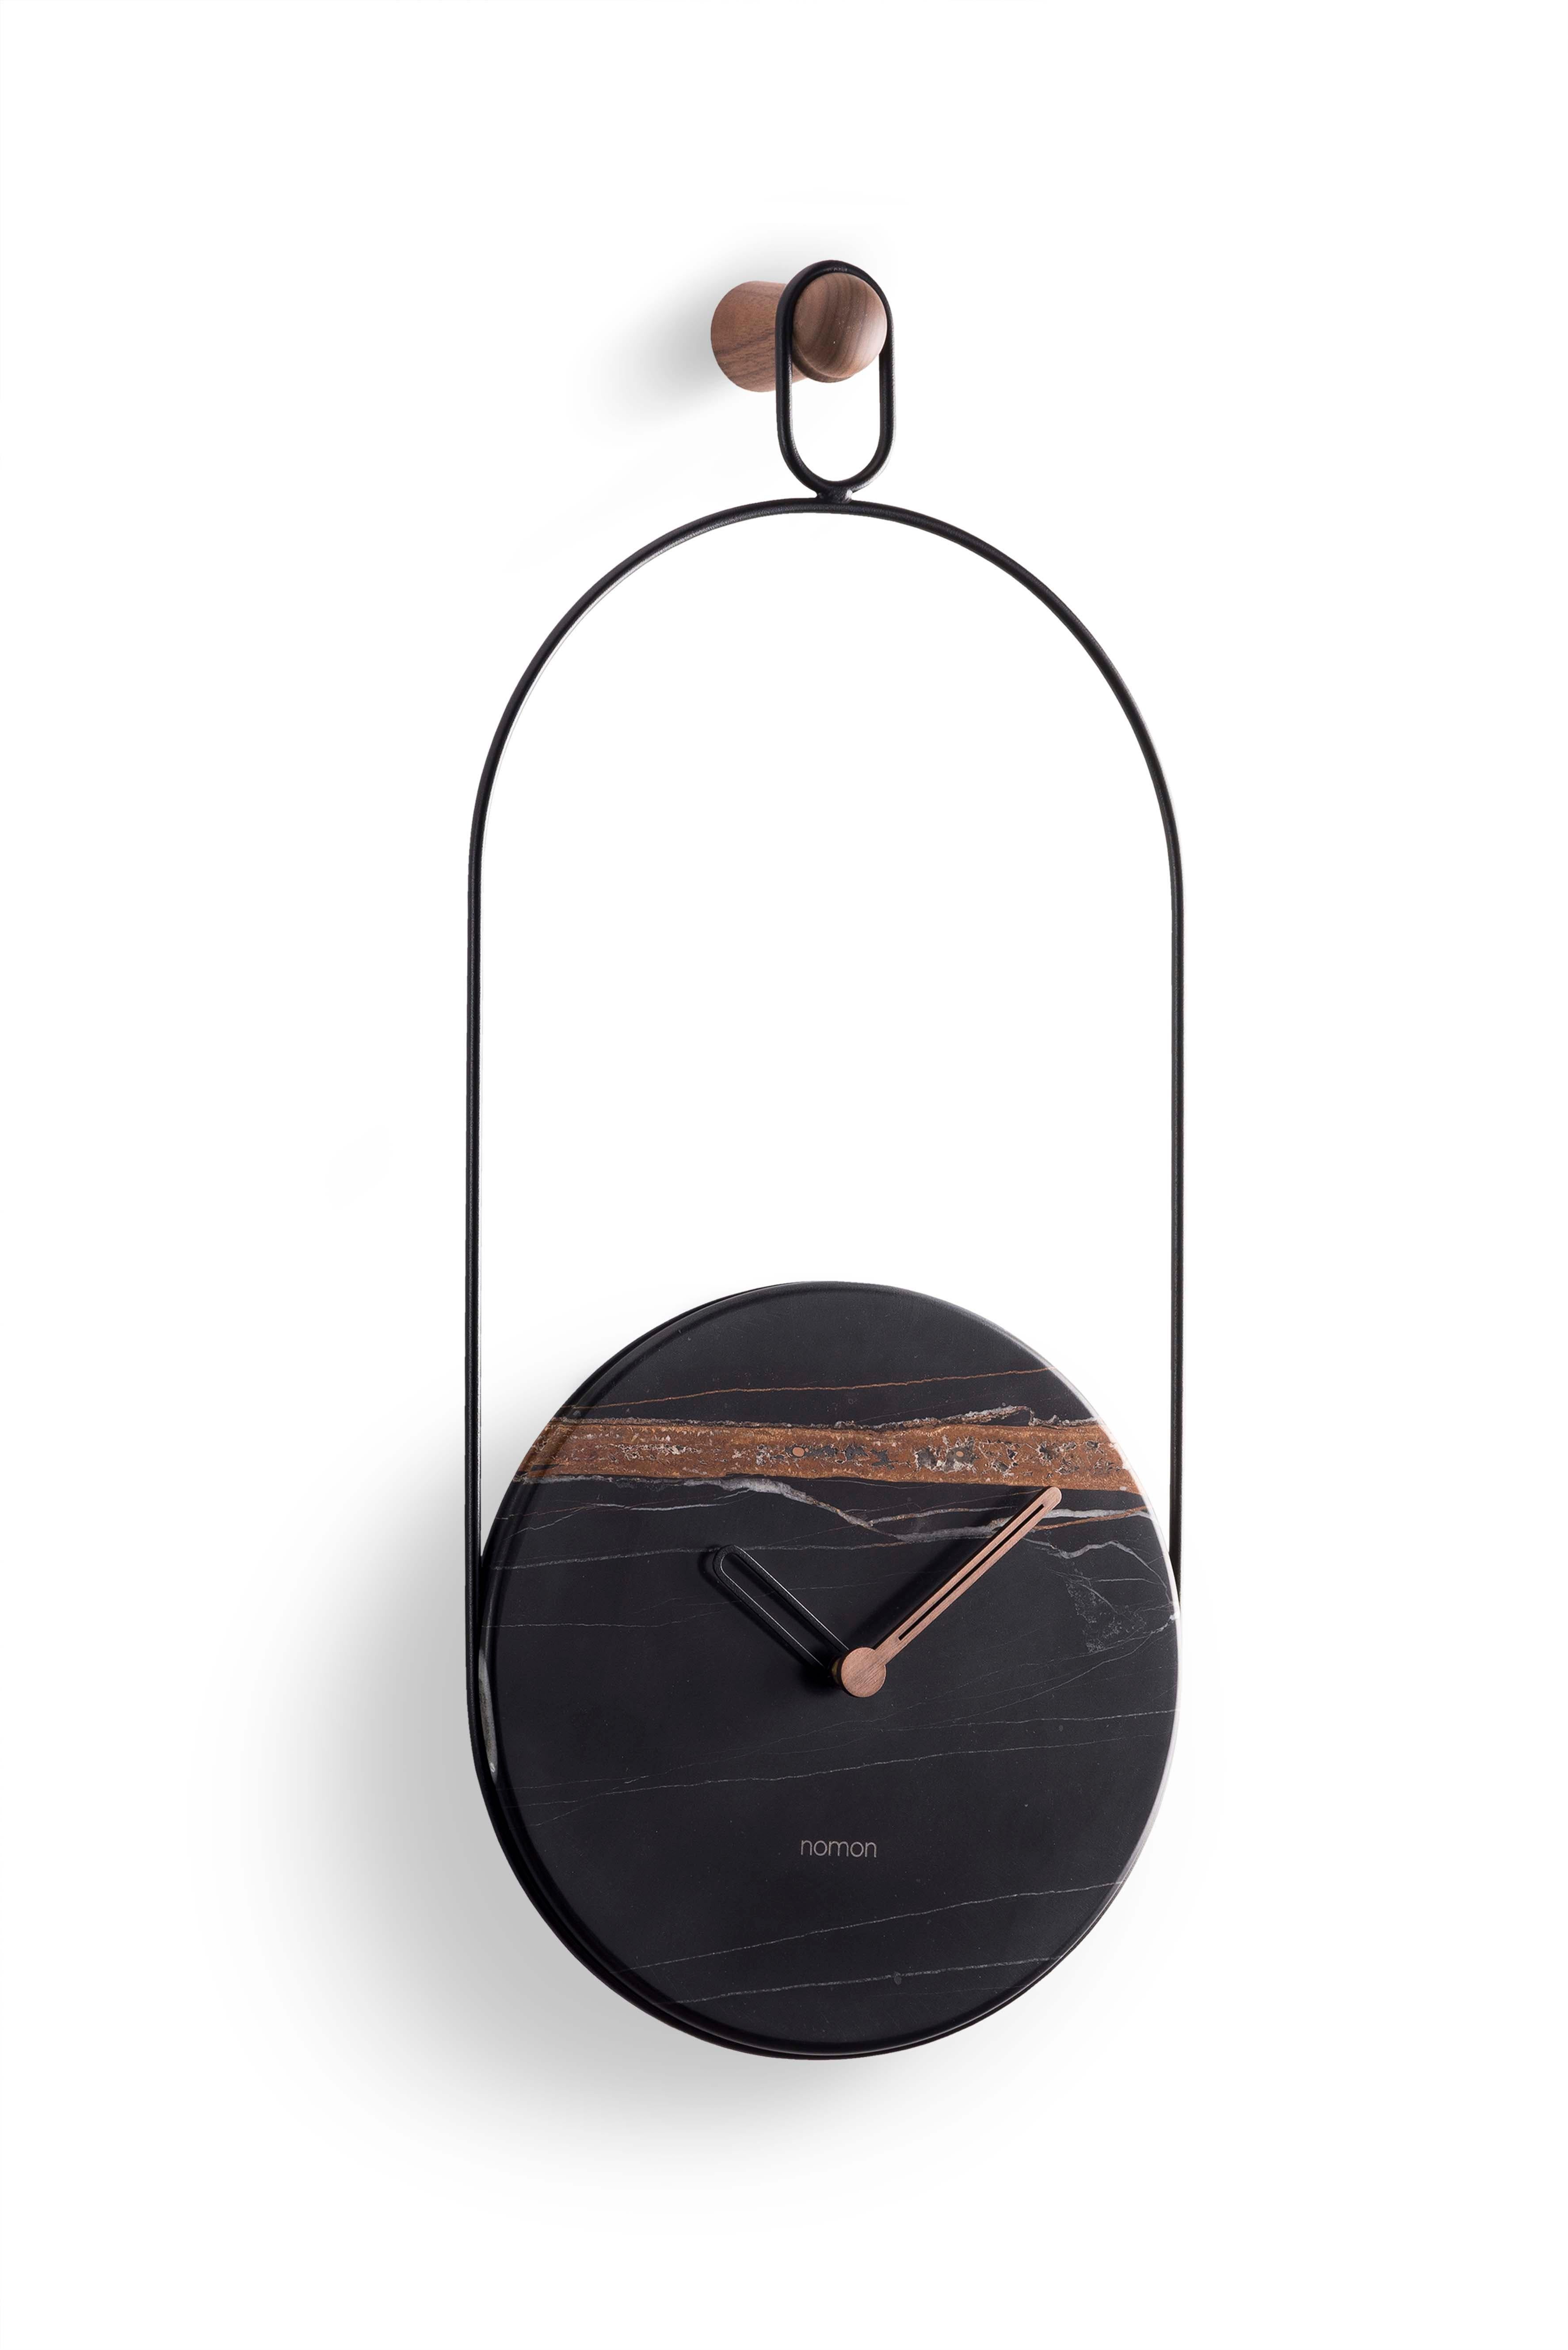 Contemporary Nomon Micro Eslabon Wall Clock  By Andres Martinez For Sale